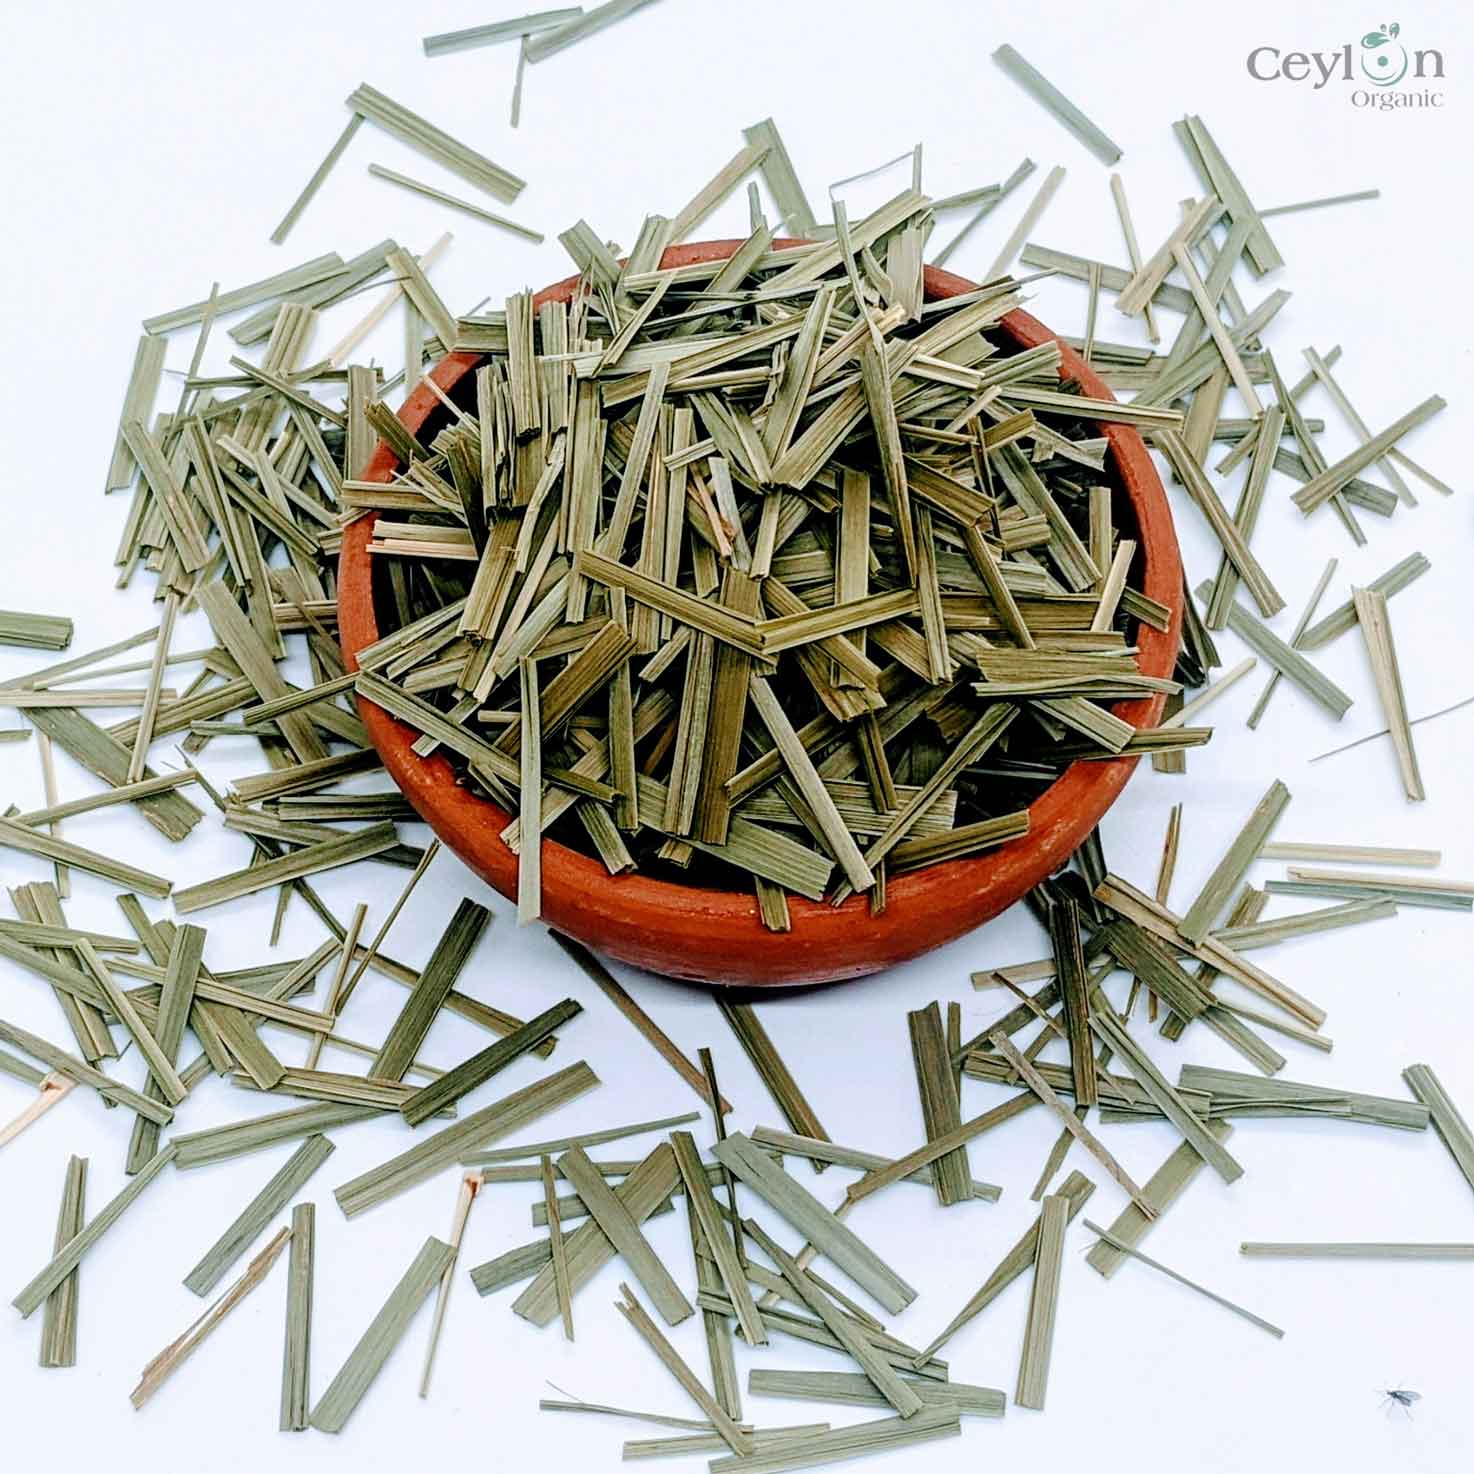 200g+  Dried Lemongrass 100% Organic | Ceylon organic-5